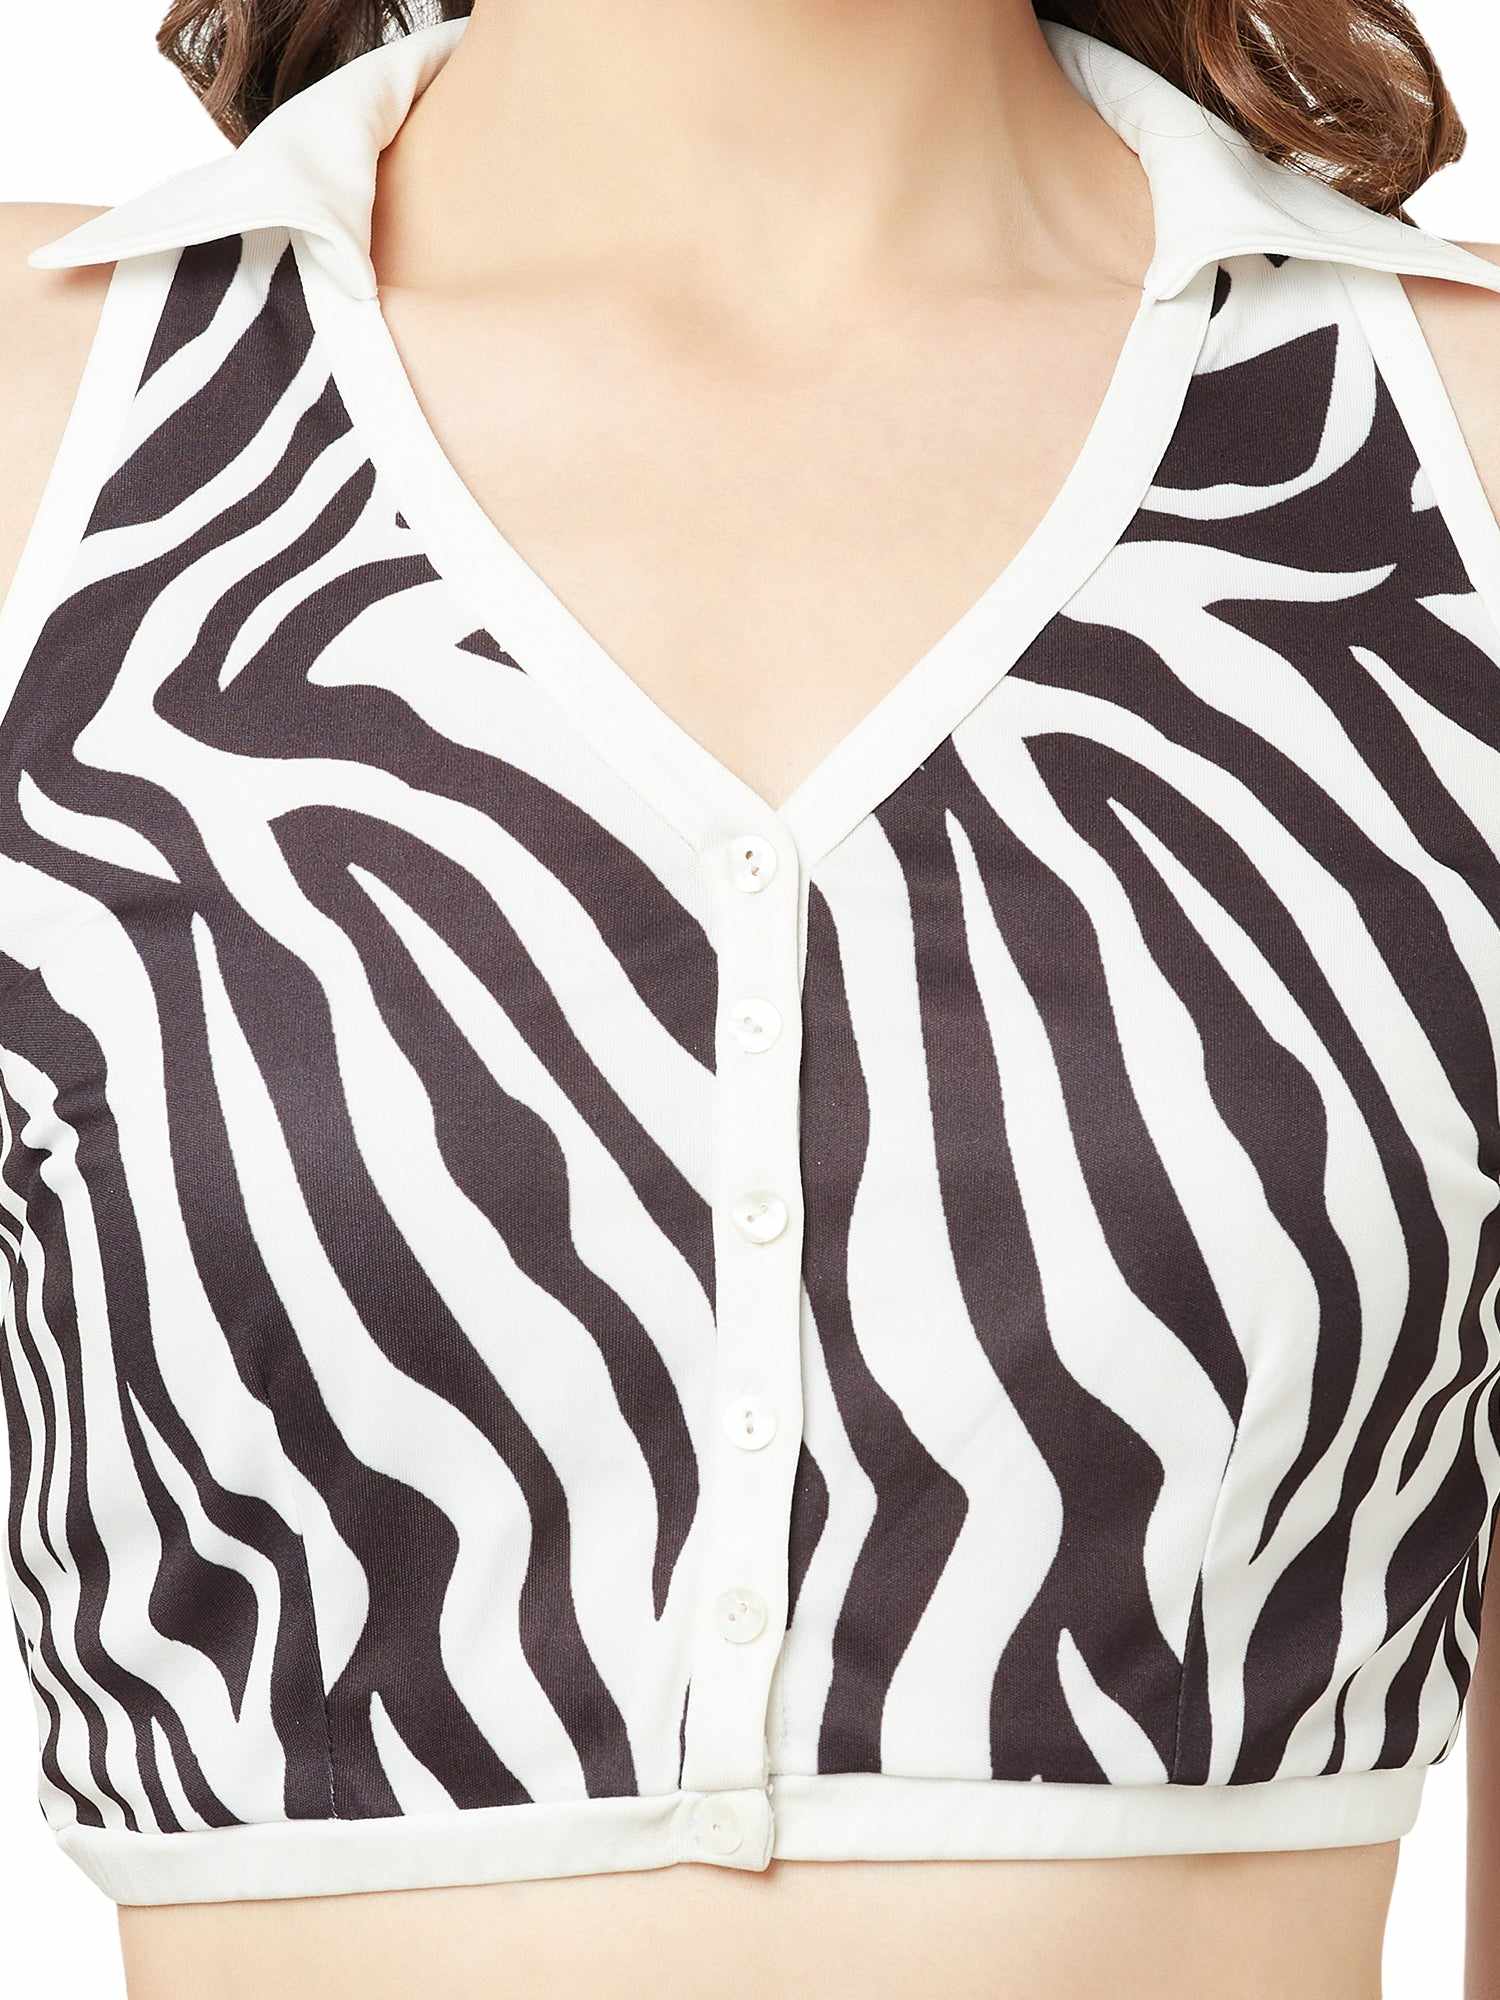 zebra crop shirt